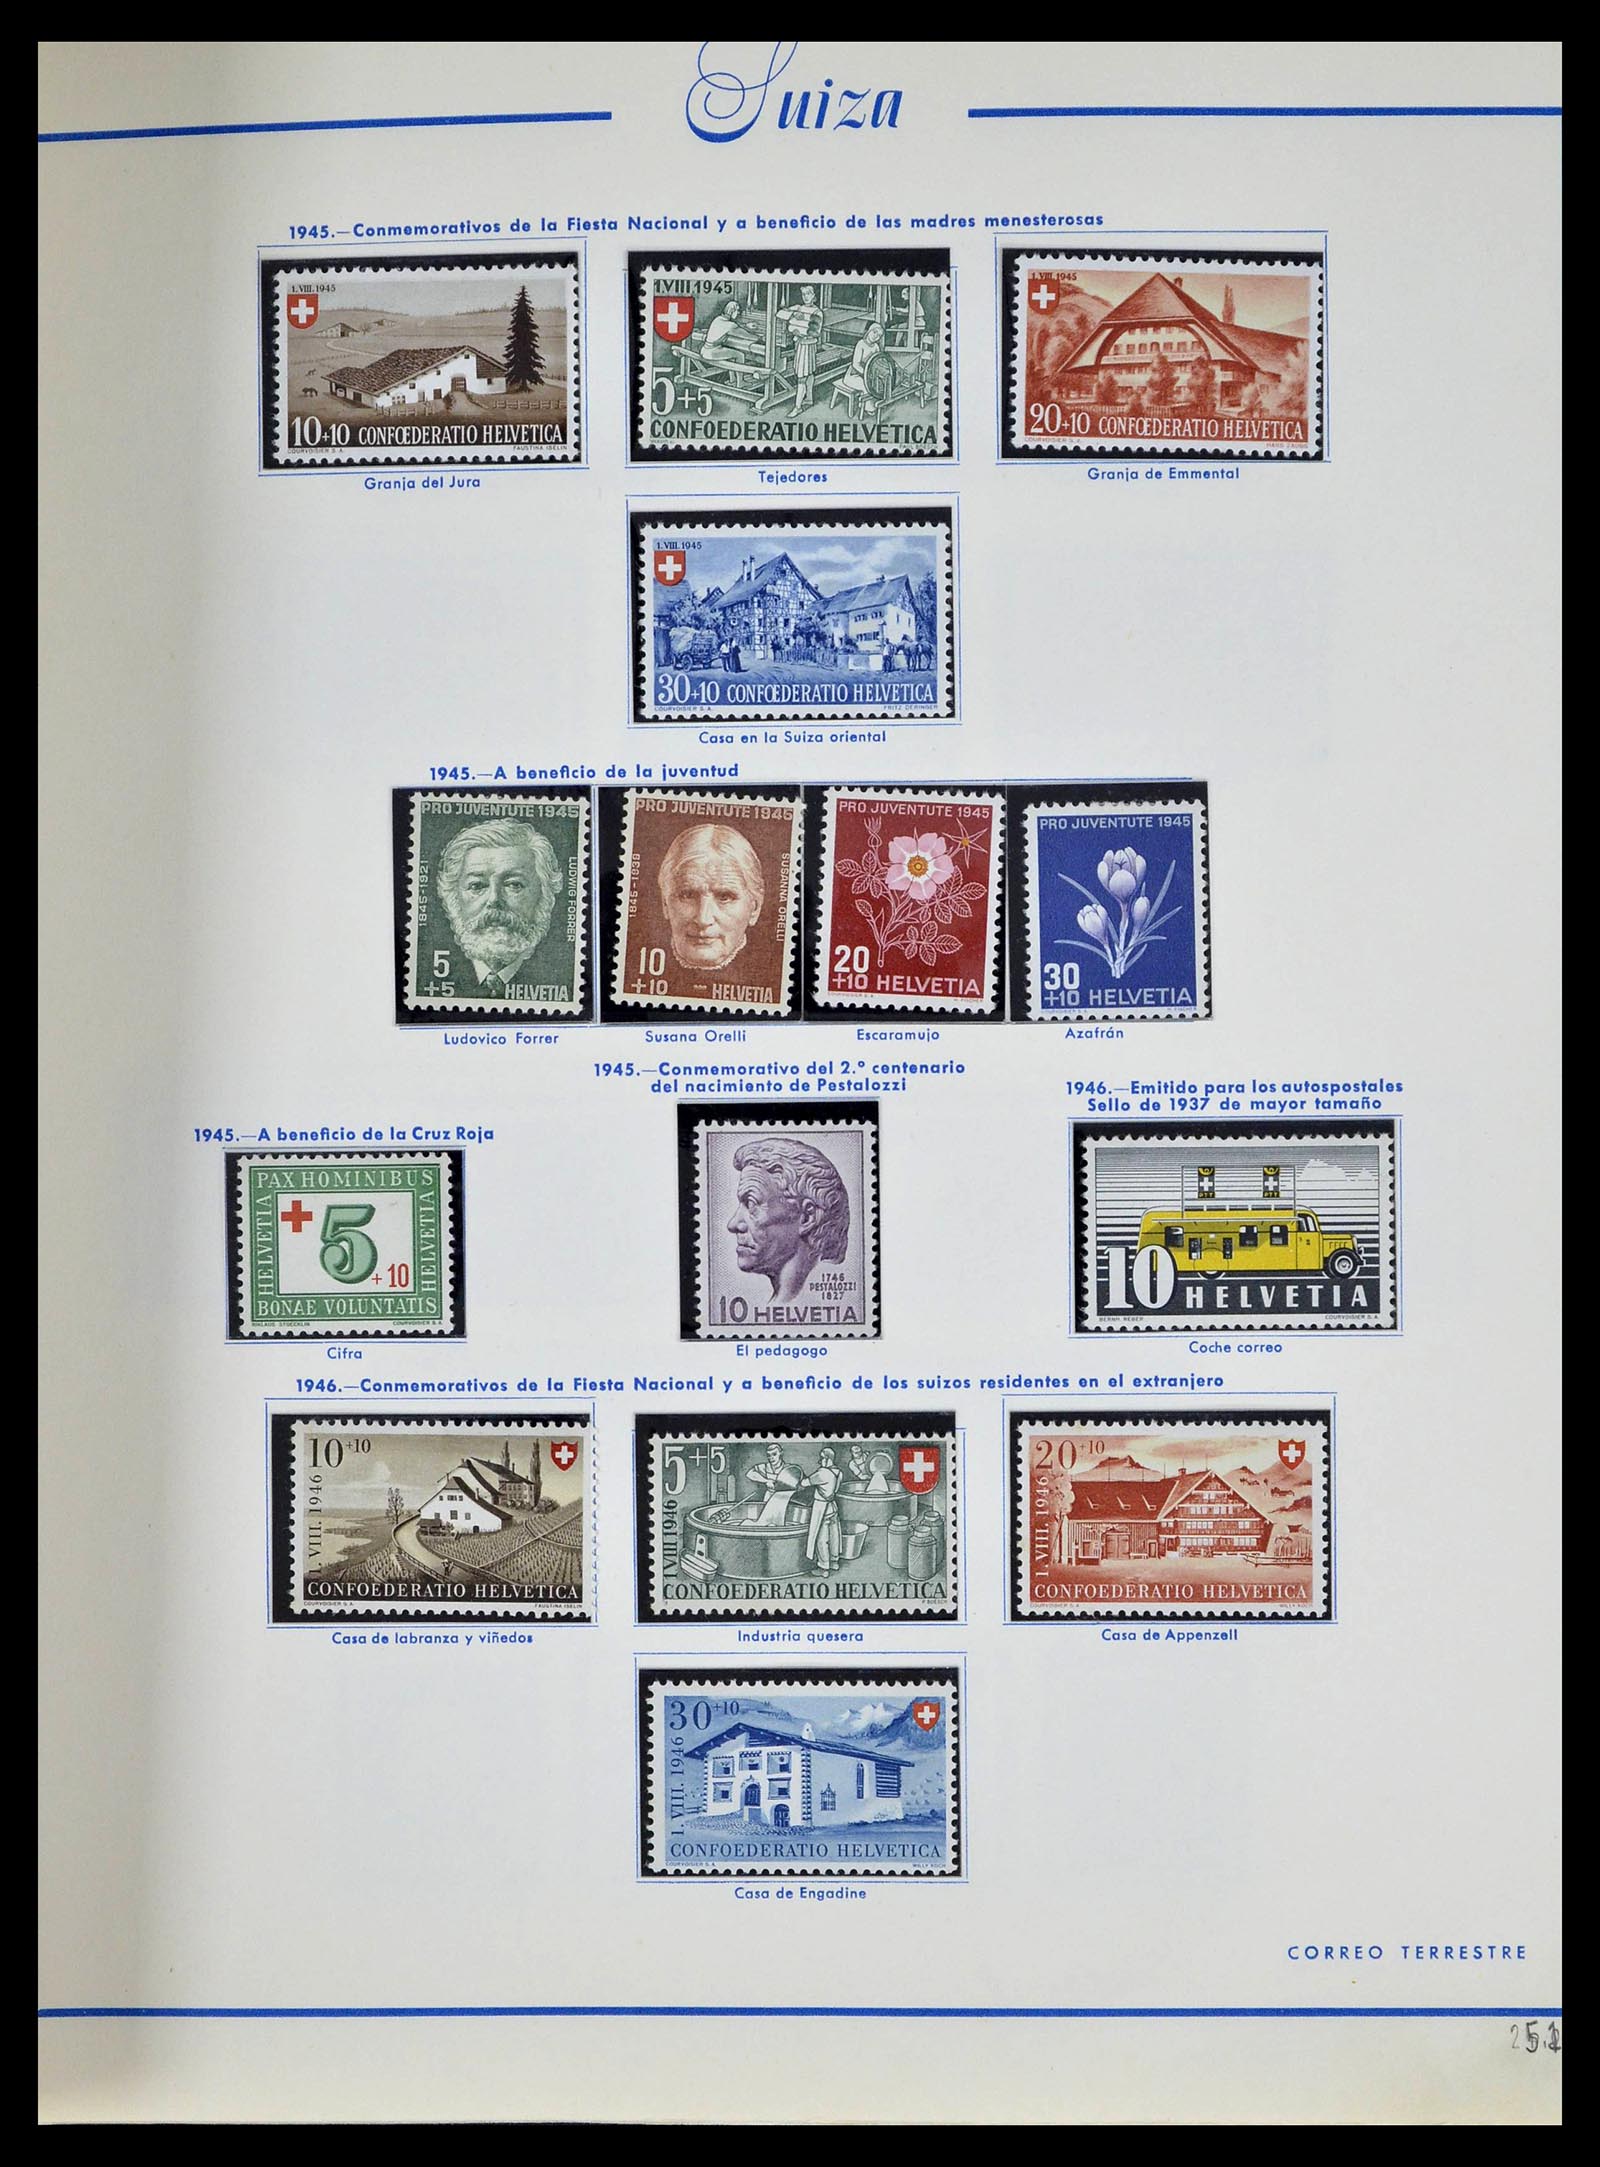 39217 0025 - Stamp collection 39217 Switzerland 1850-1986.